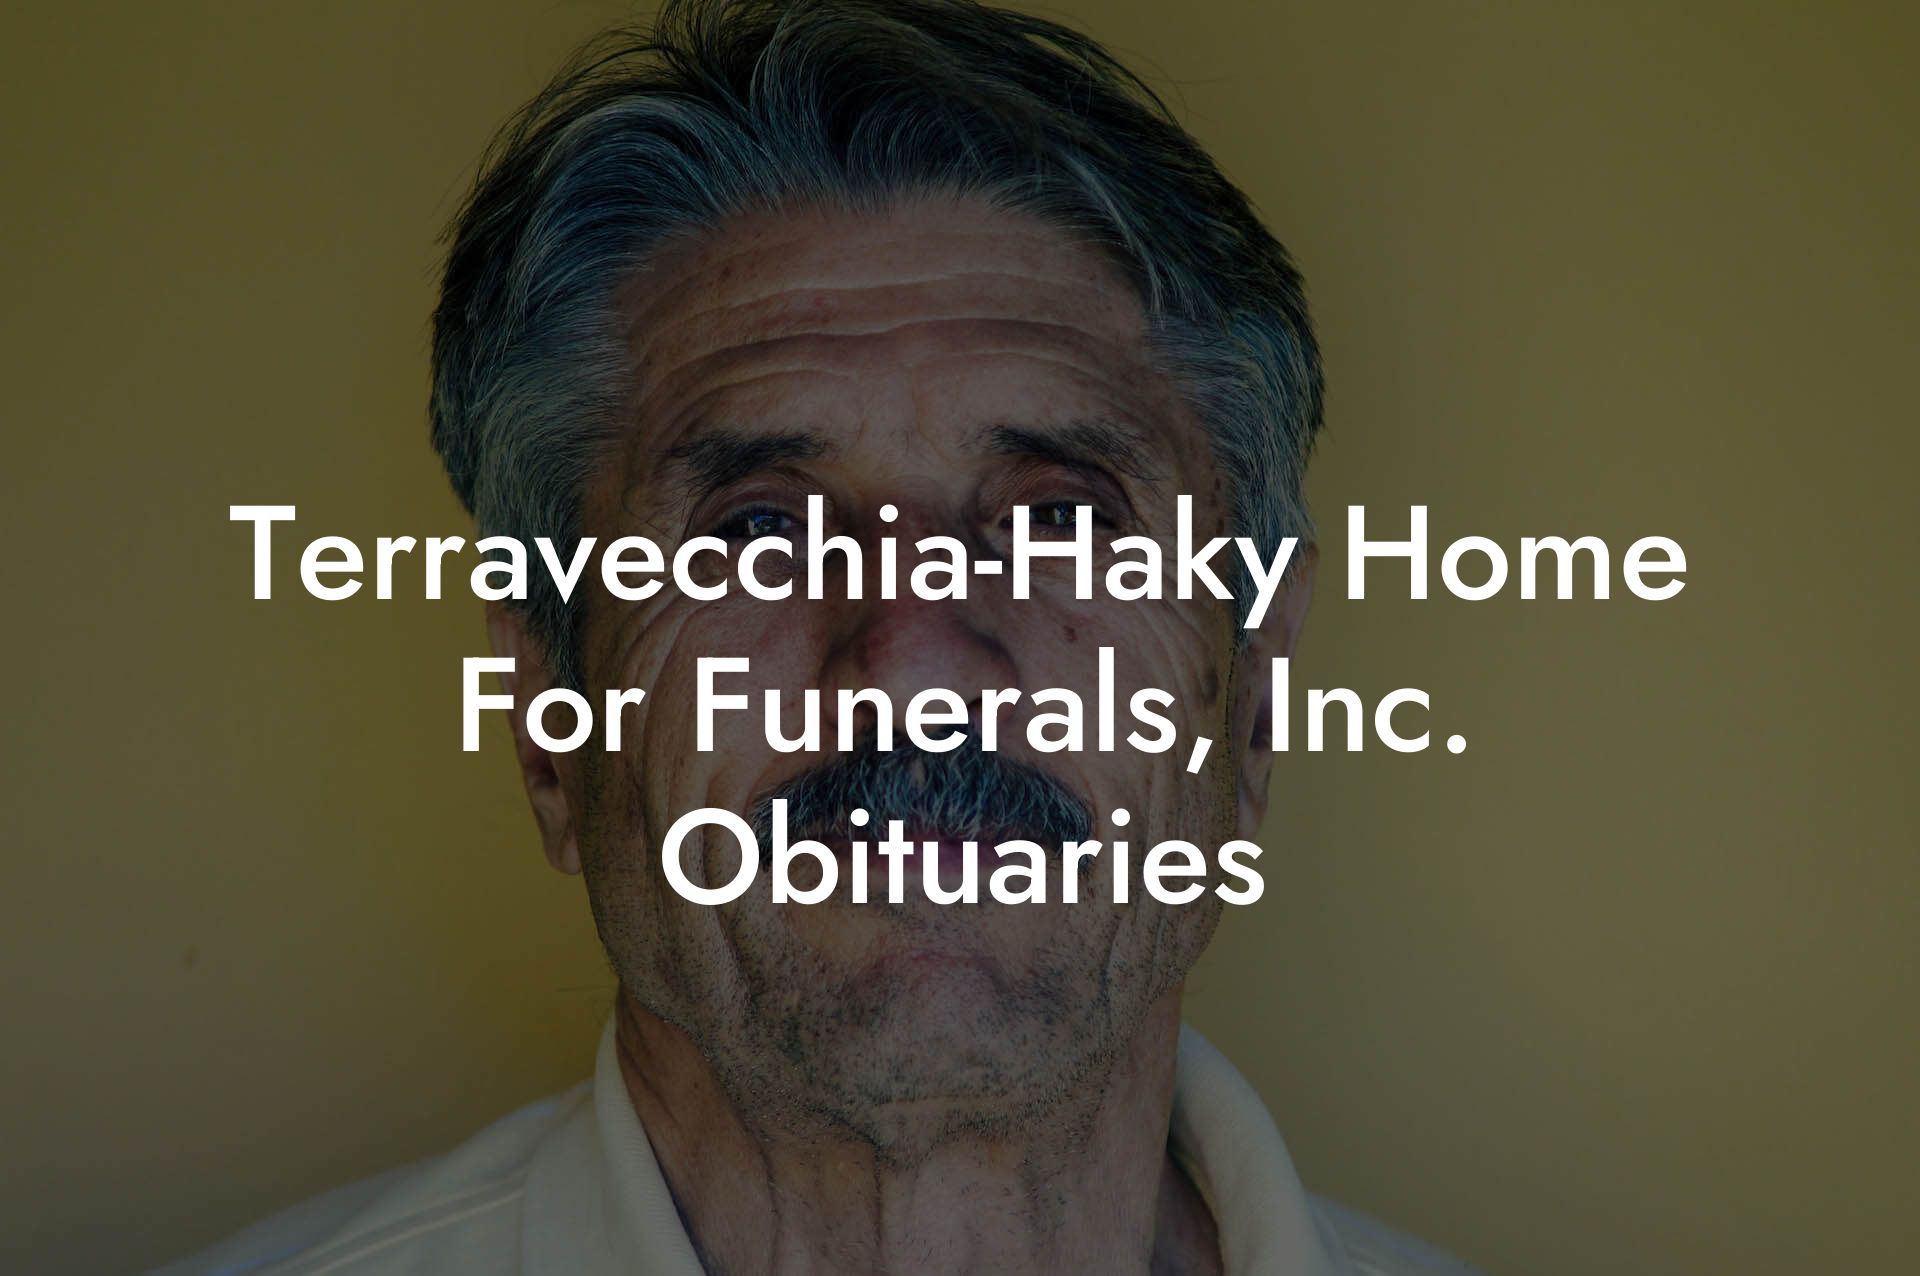 Terravecchia-Haky Home For Funerals, Inc. Obituaries